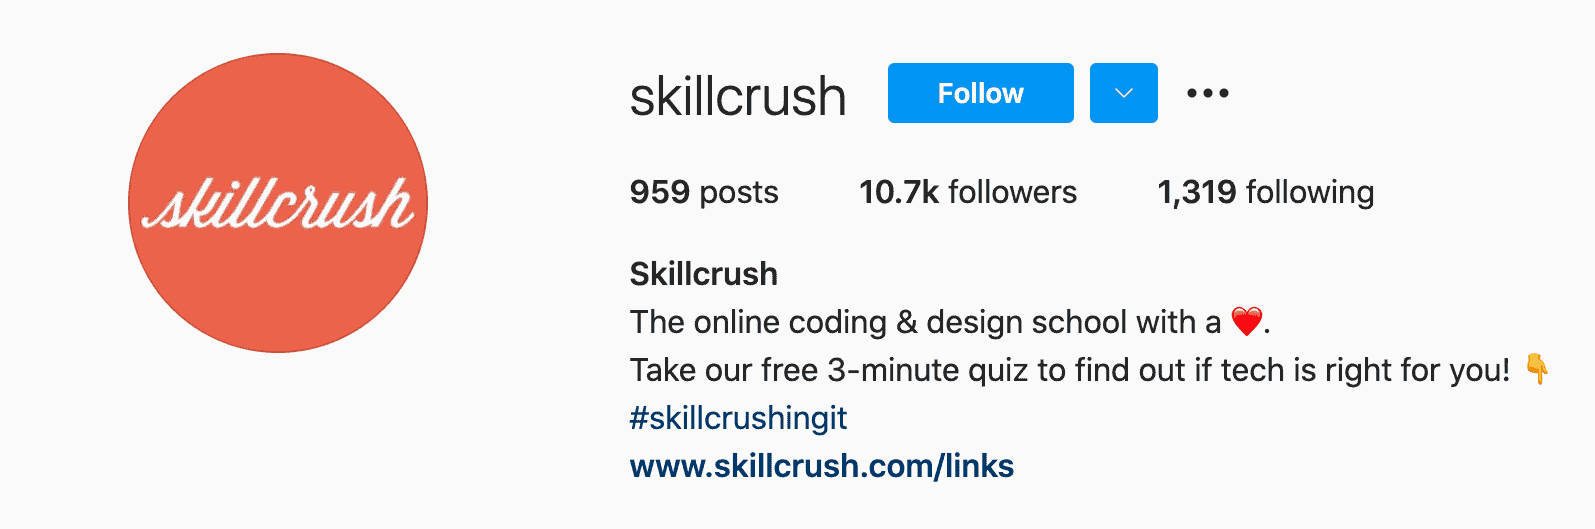 skillcrush's ig